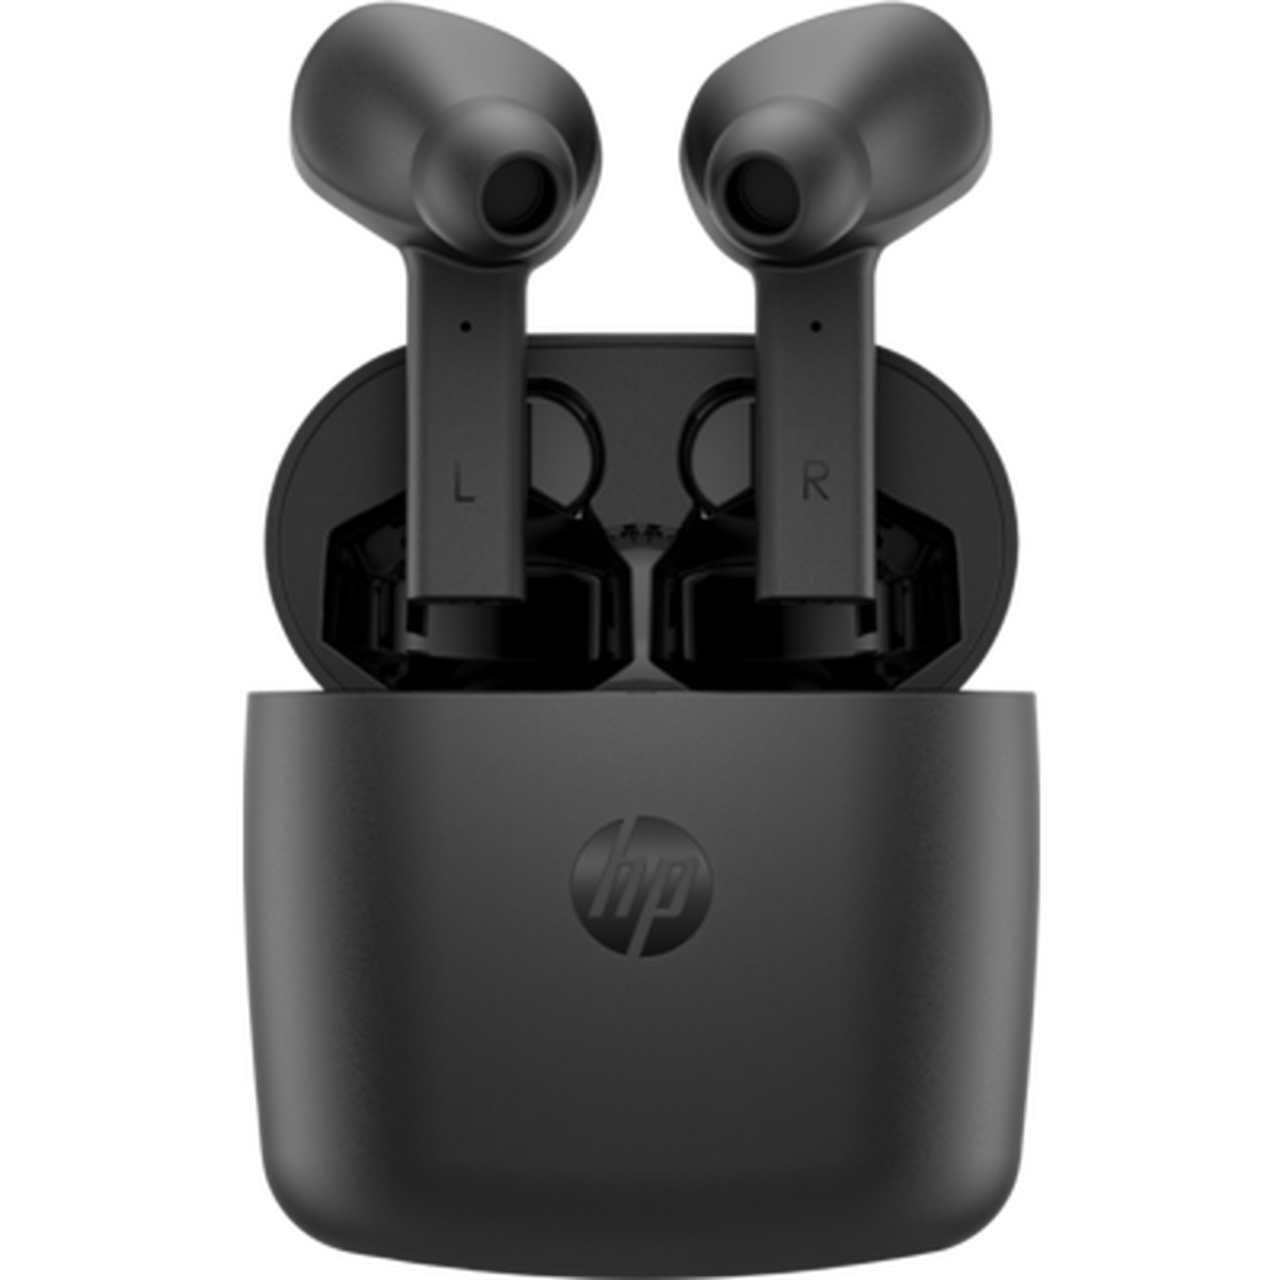 HP Headset Wireless Earbuds G2 Stereo Bluetooth USB C - Black